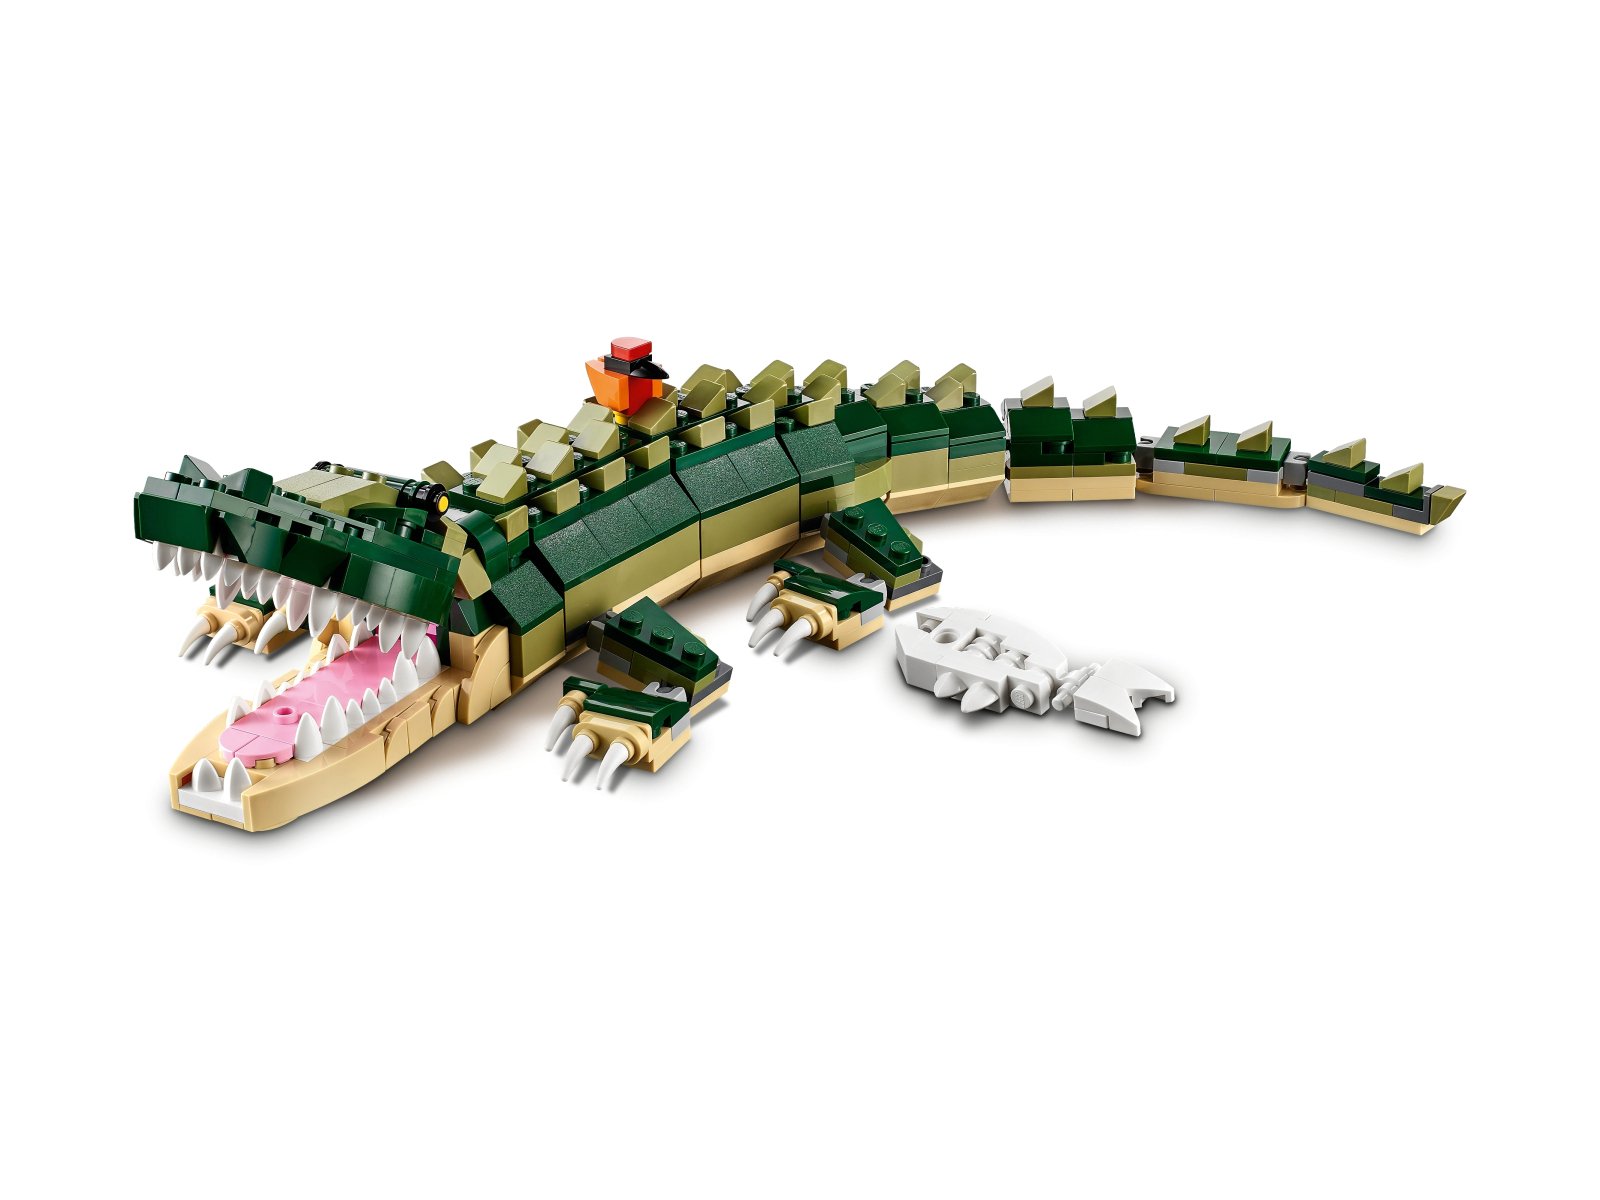 LEGO 31121 Creator 3 w 1 Krokodyl